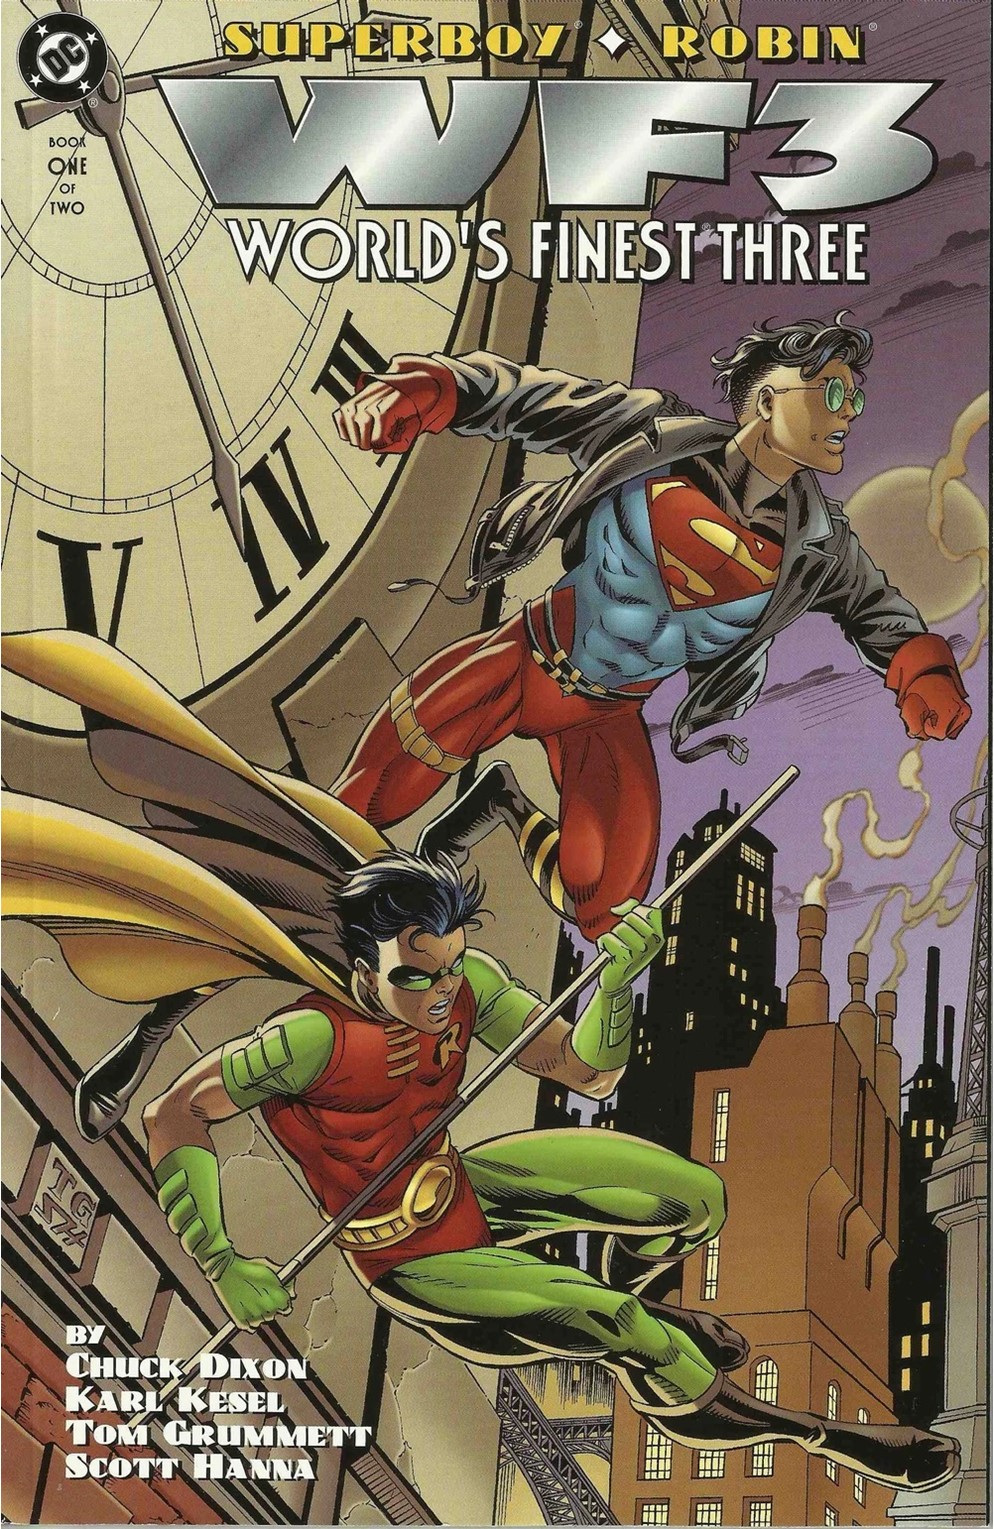 Wf3: World's Finest Three Superboy/Robin Prestige Format Limited Series Bundle Issues 1-2